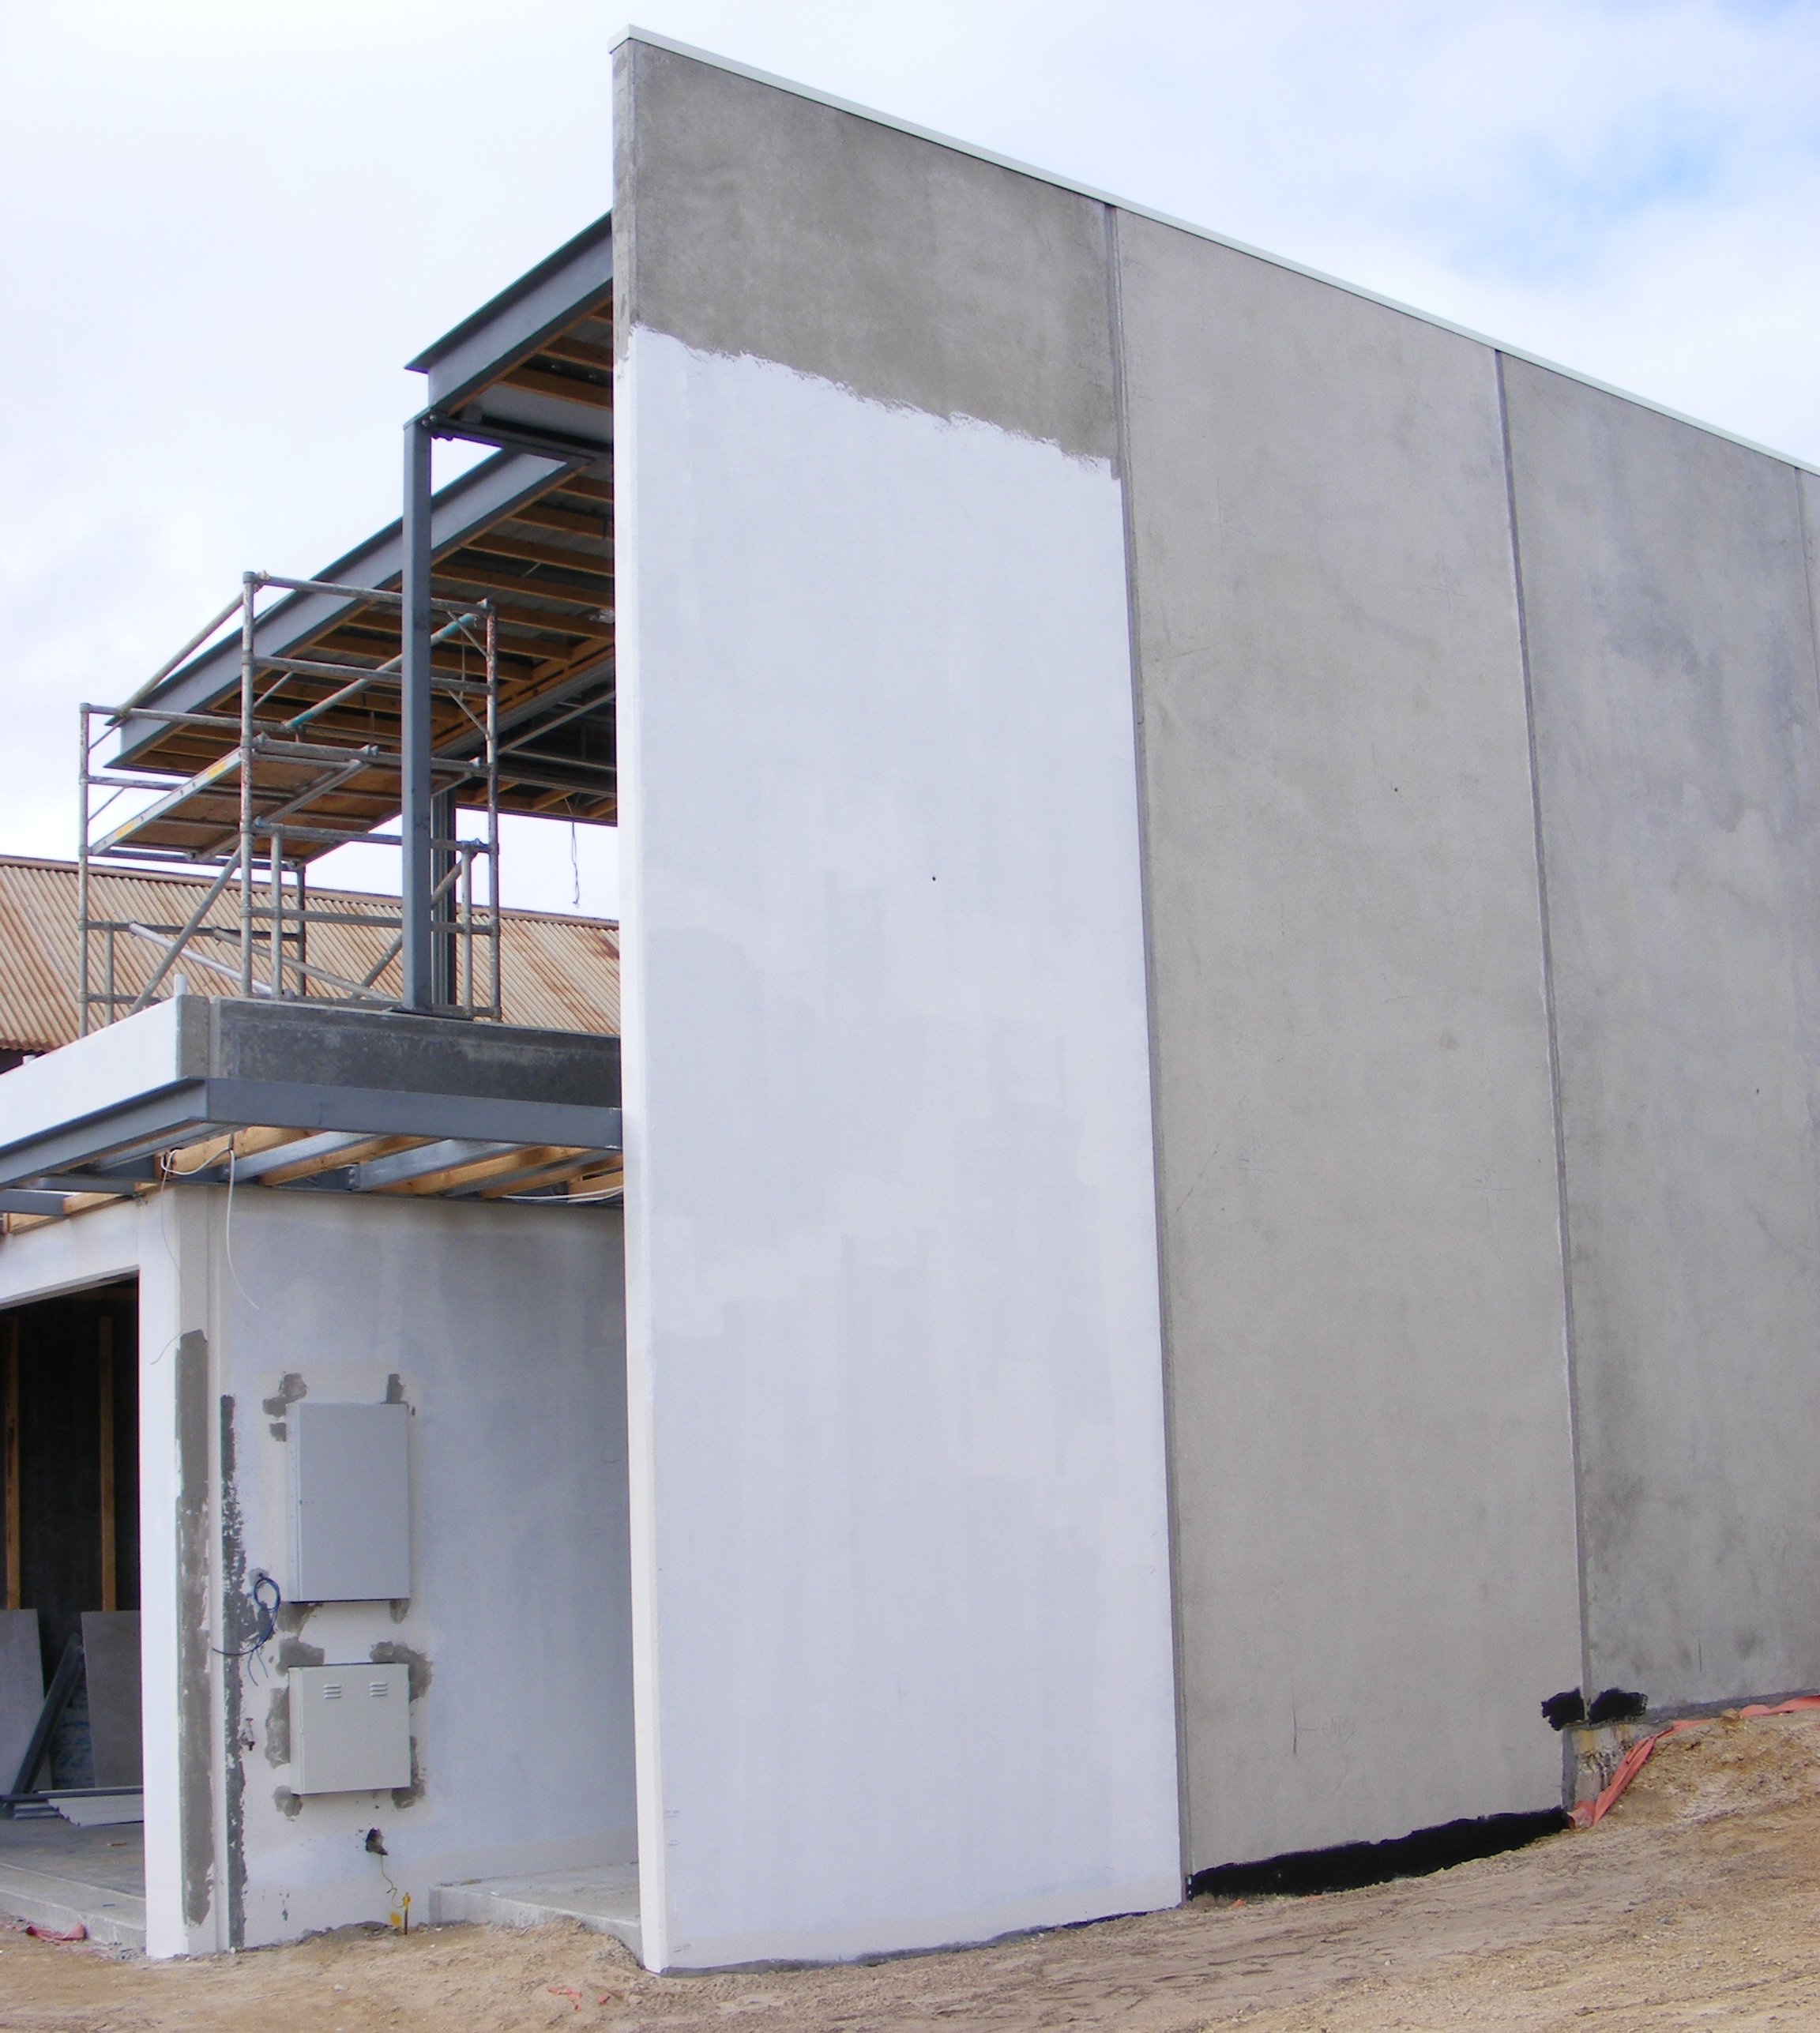 File:Precast concrete house in construction.JPG - Wikimedia Commons